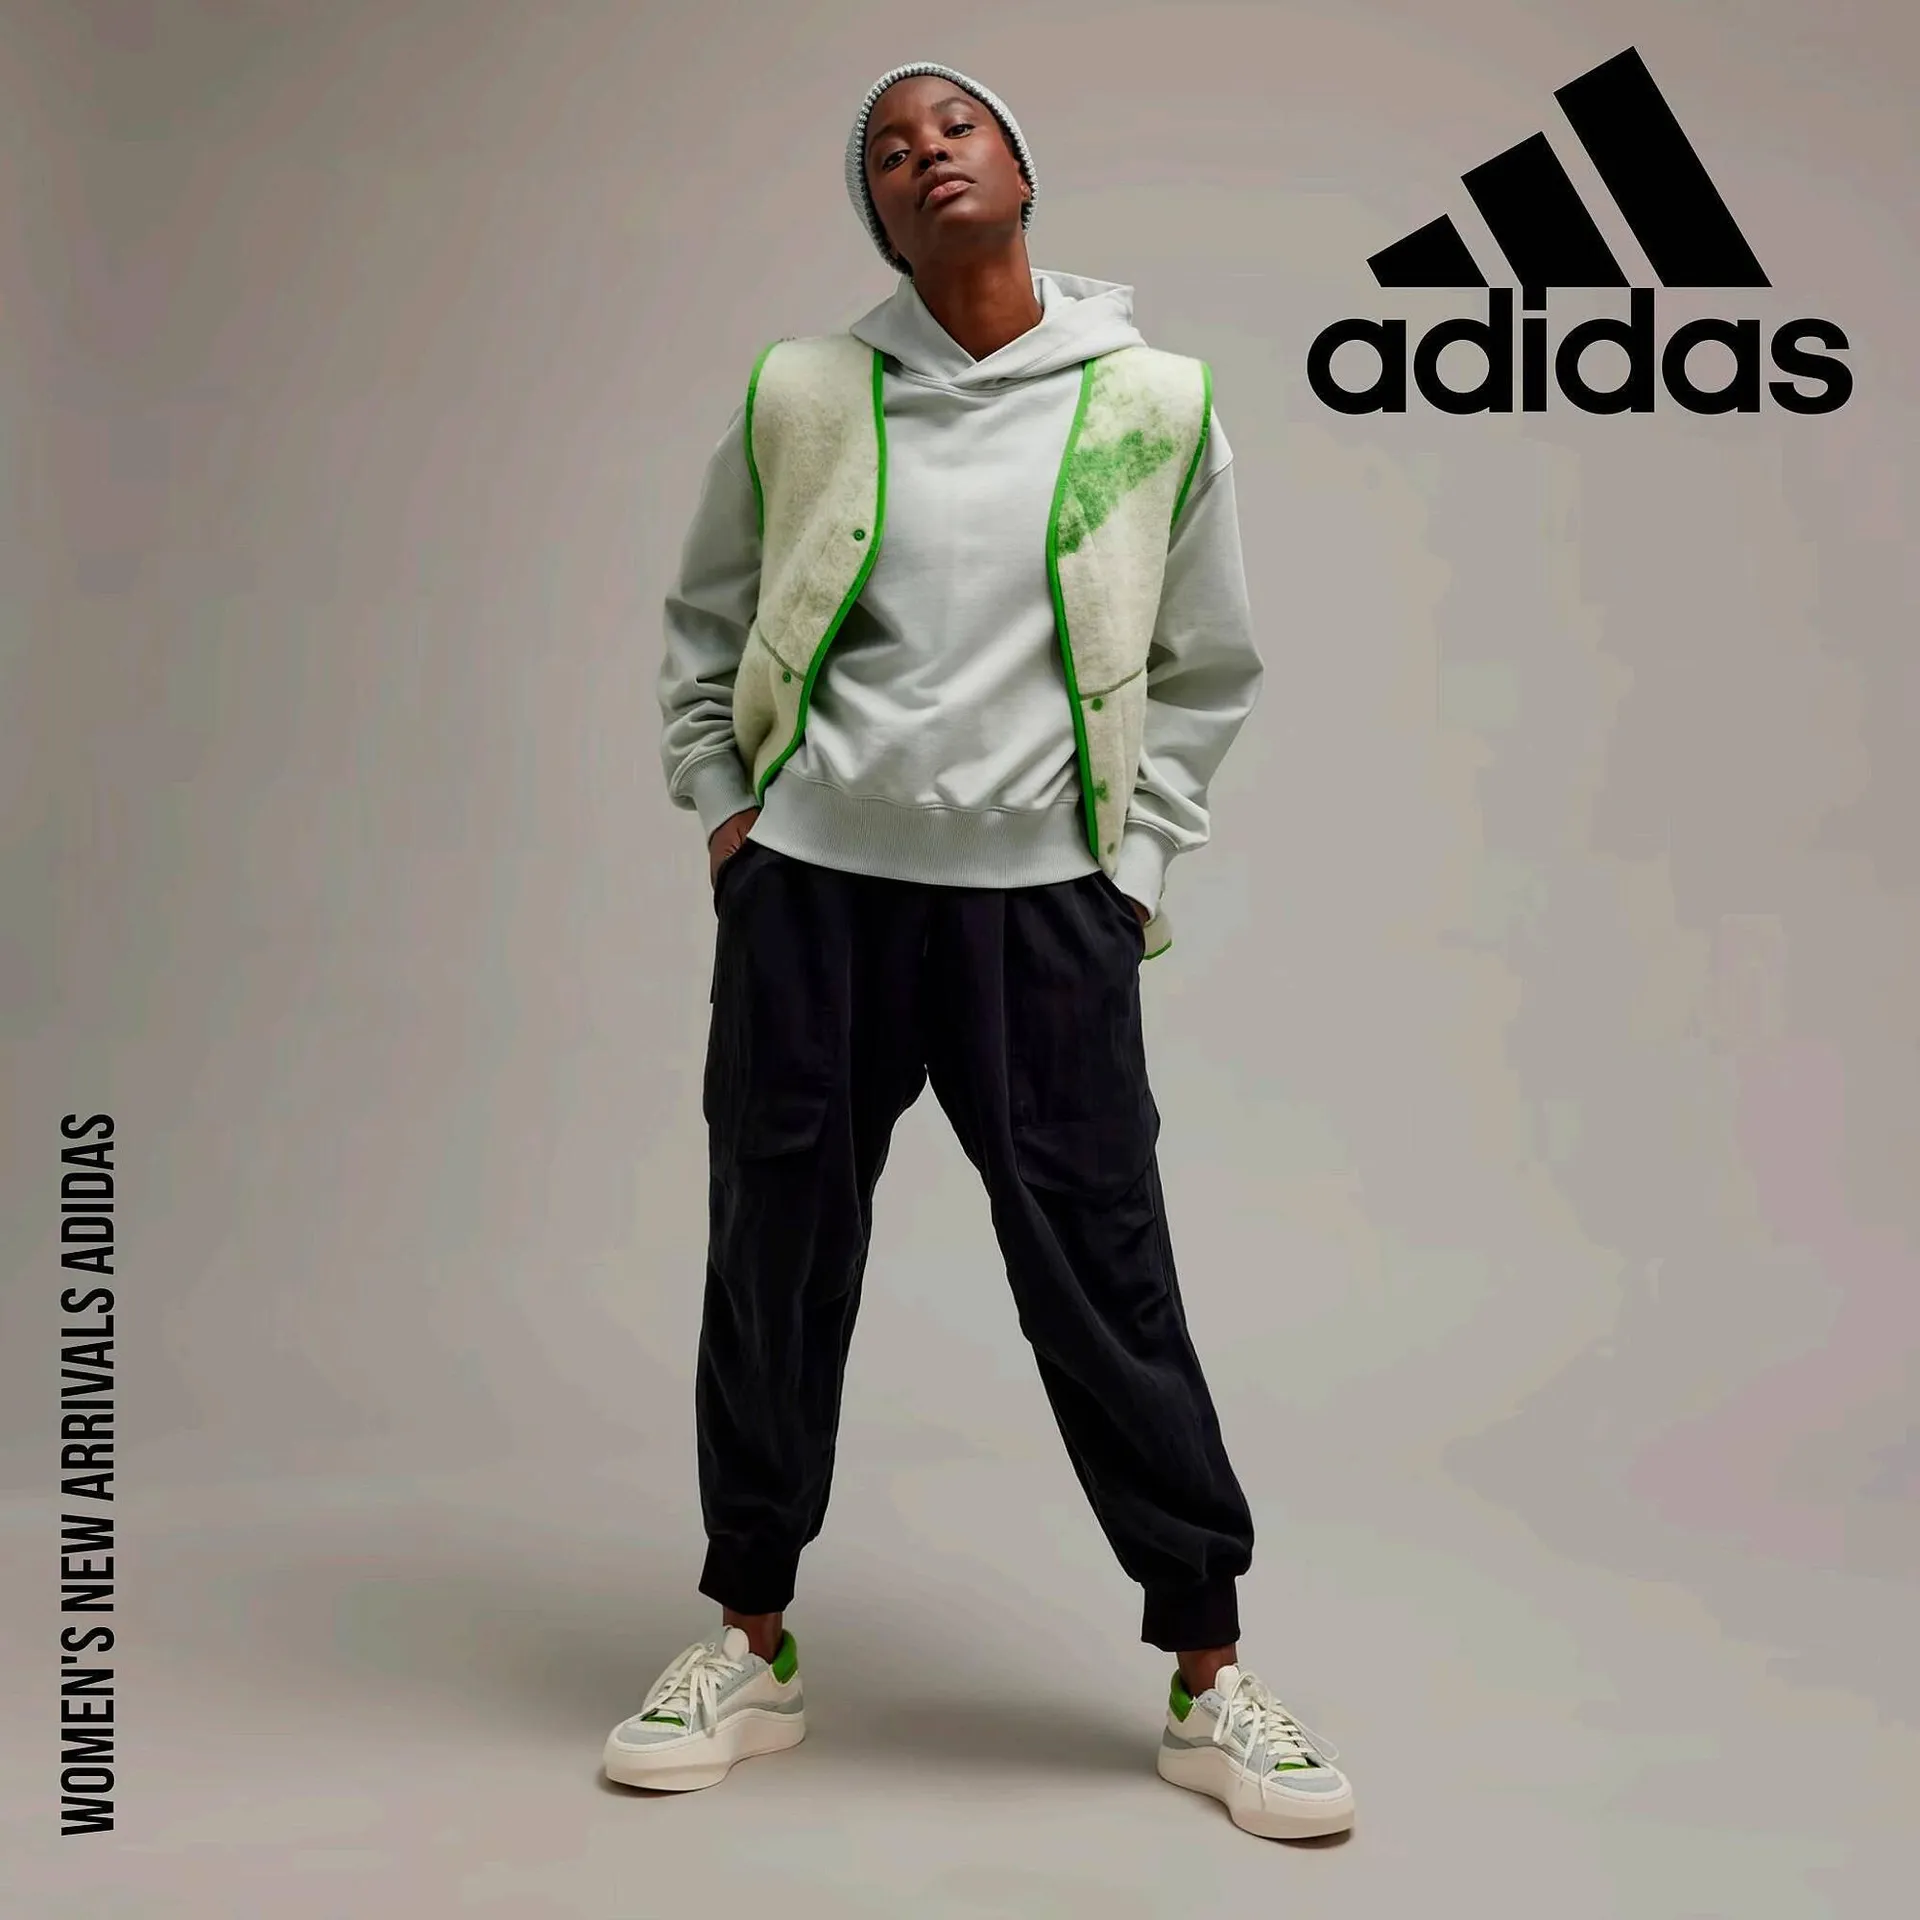 Adidas catalogue